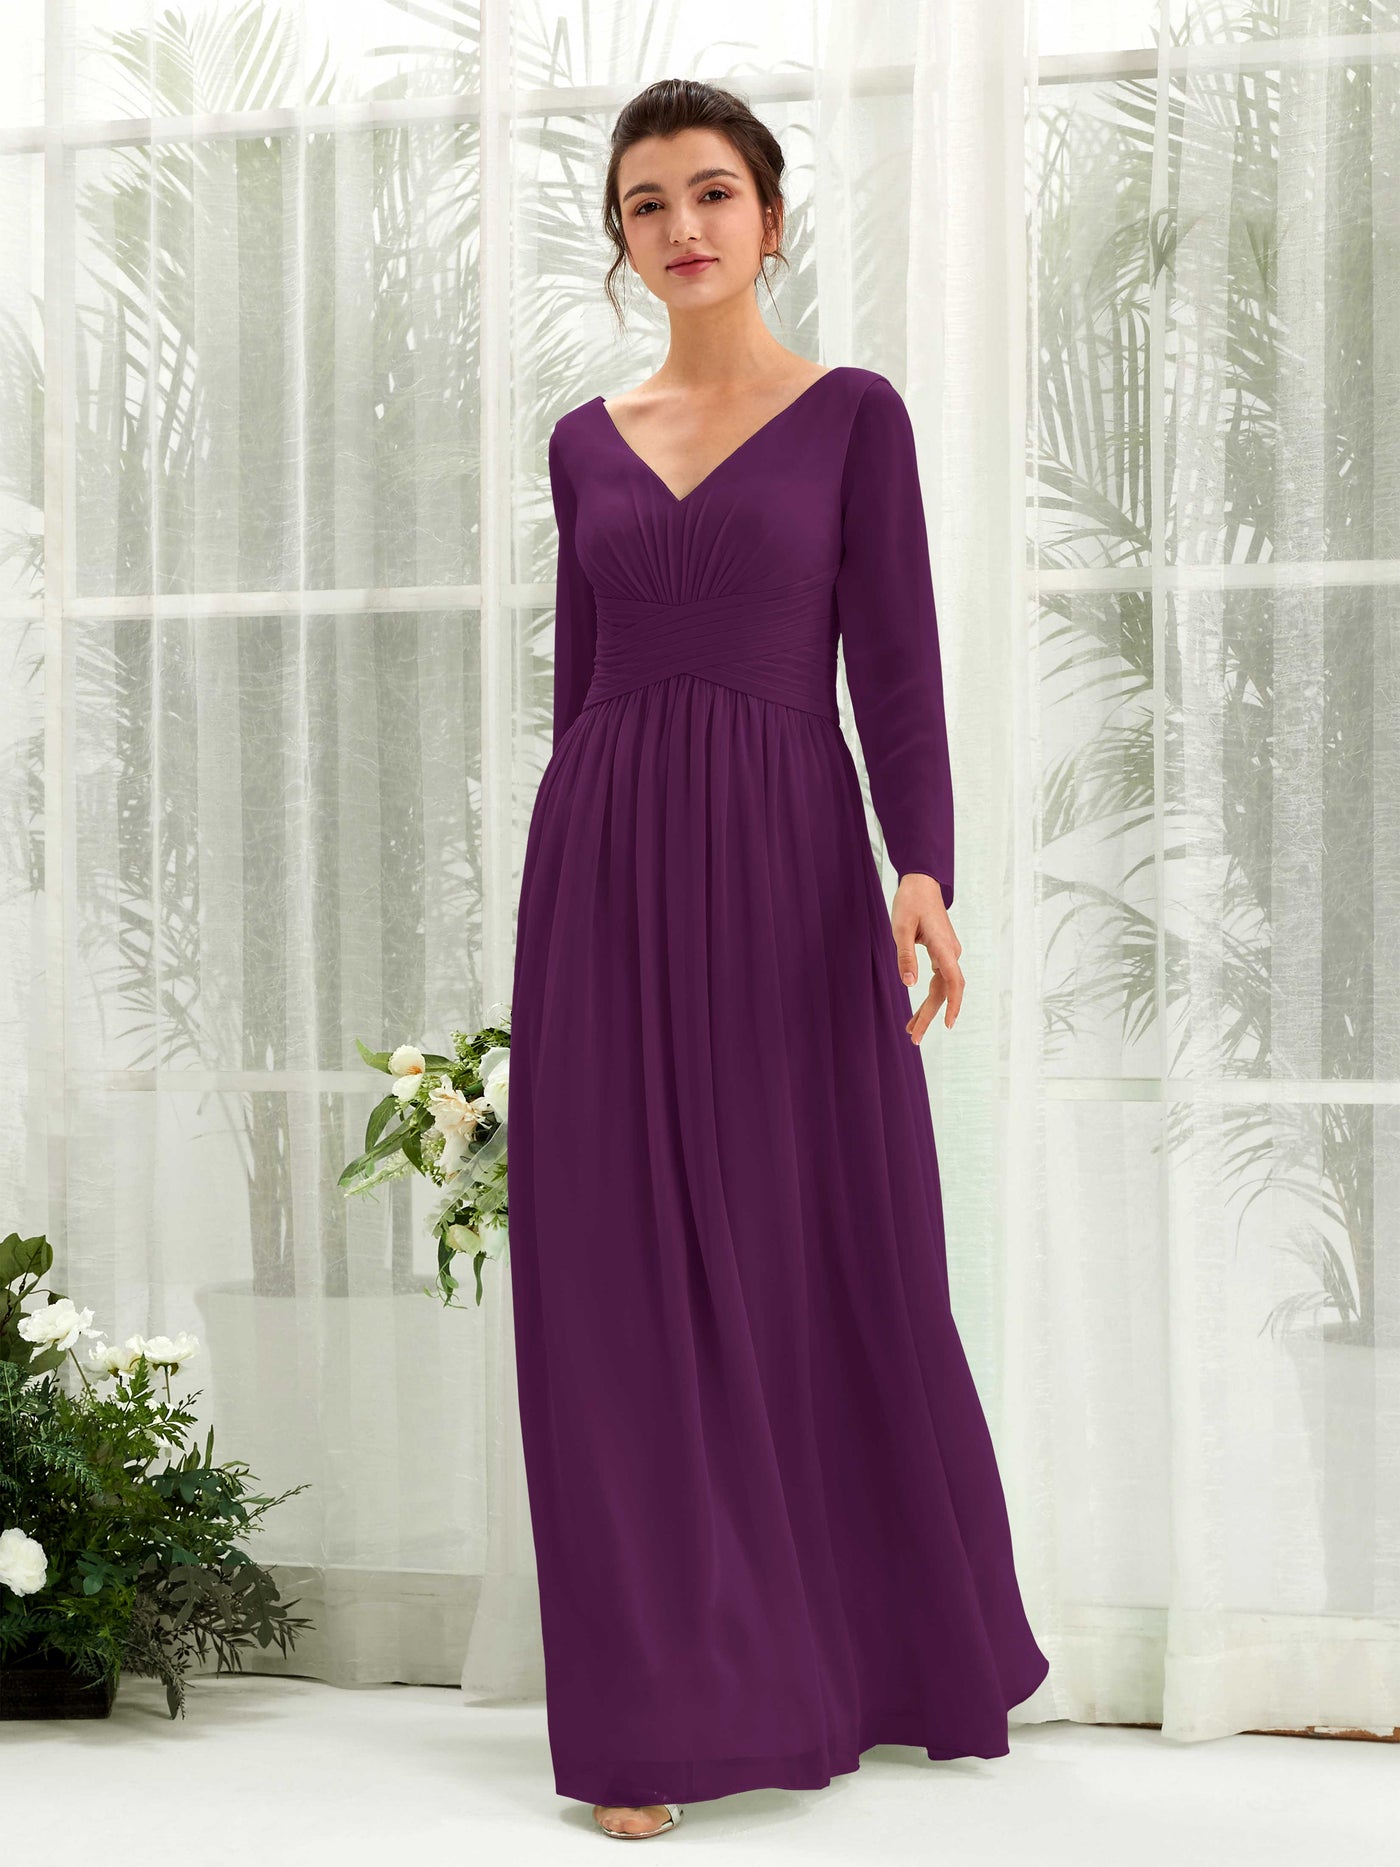 Grape Bridesmaid Dresses Bridesmaid Dress A-line Chiffon V-neck Full Length Long Sleeves Wedding Party Dress (81220331)#color_grape